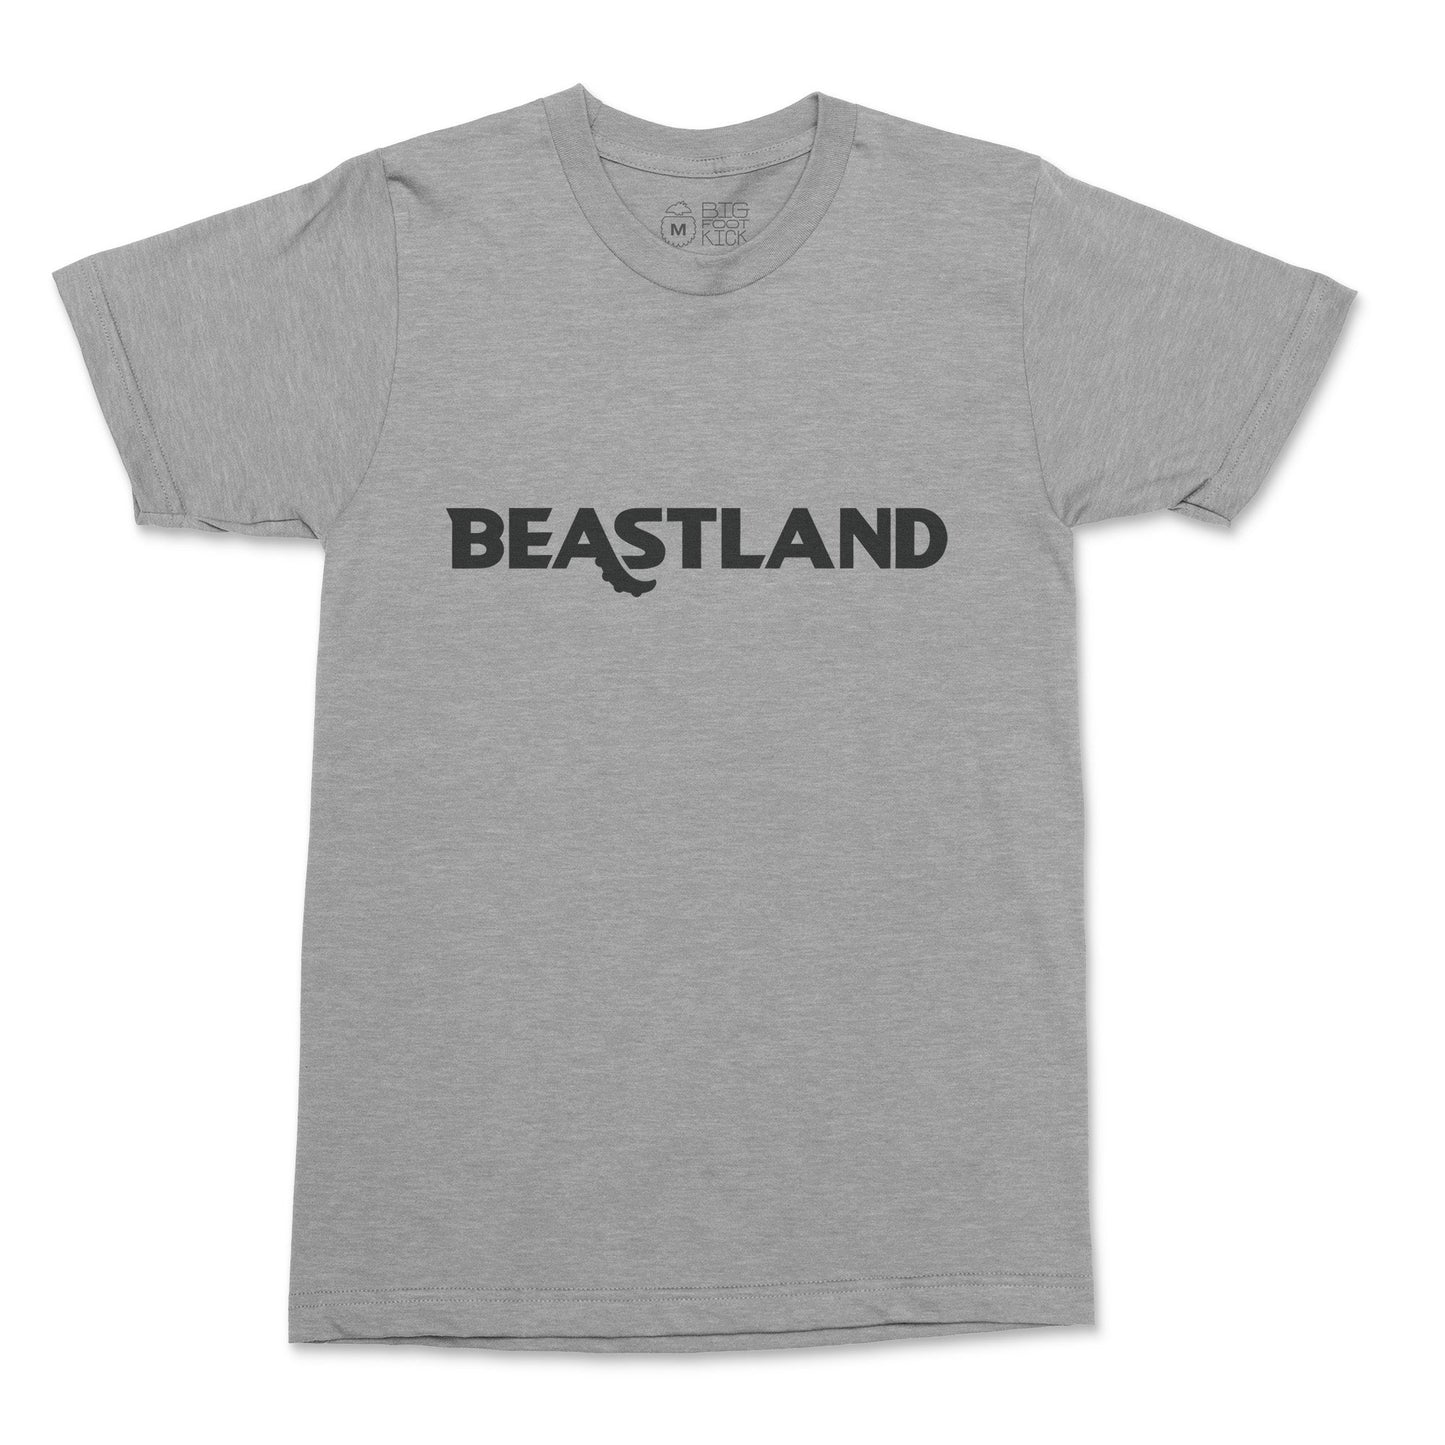 Beastland T-Shirt in Gray - Bigfoot Kick